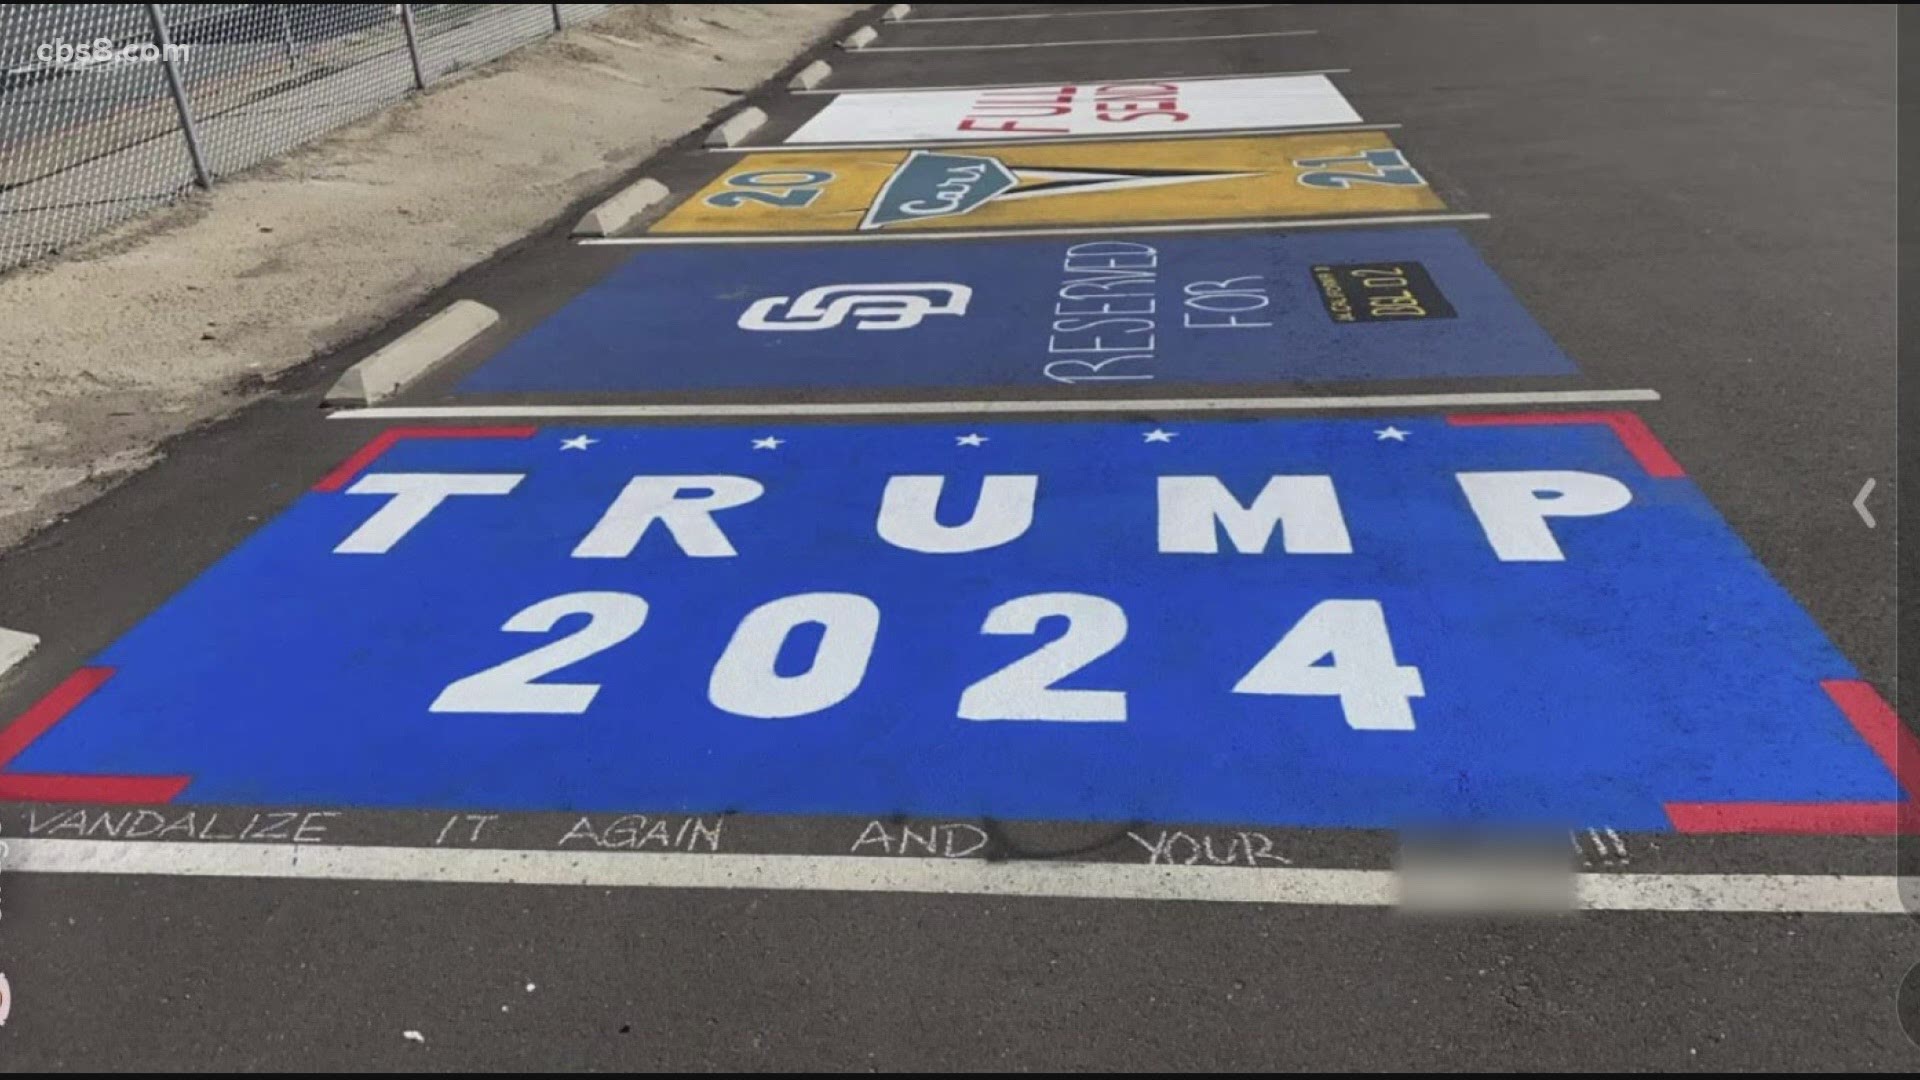 "Trump 2024" parking spot at high school in El Cajon